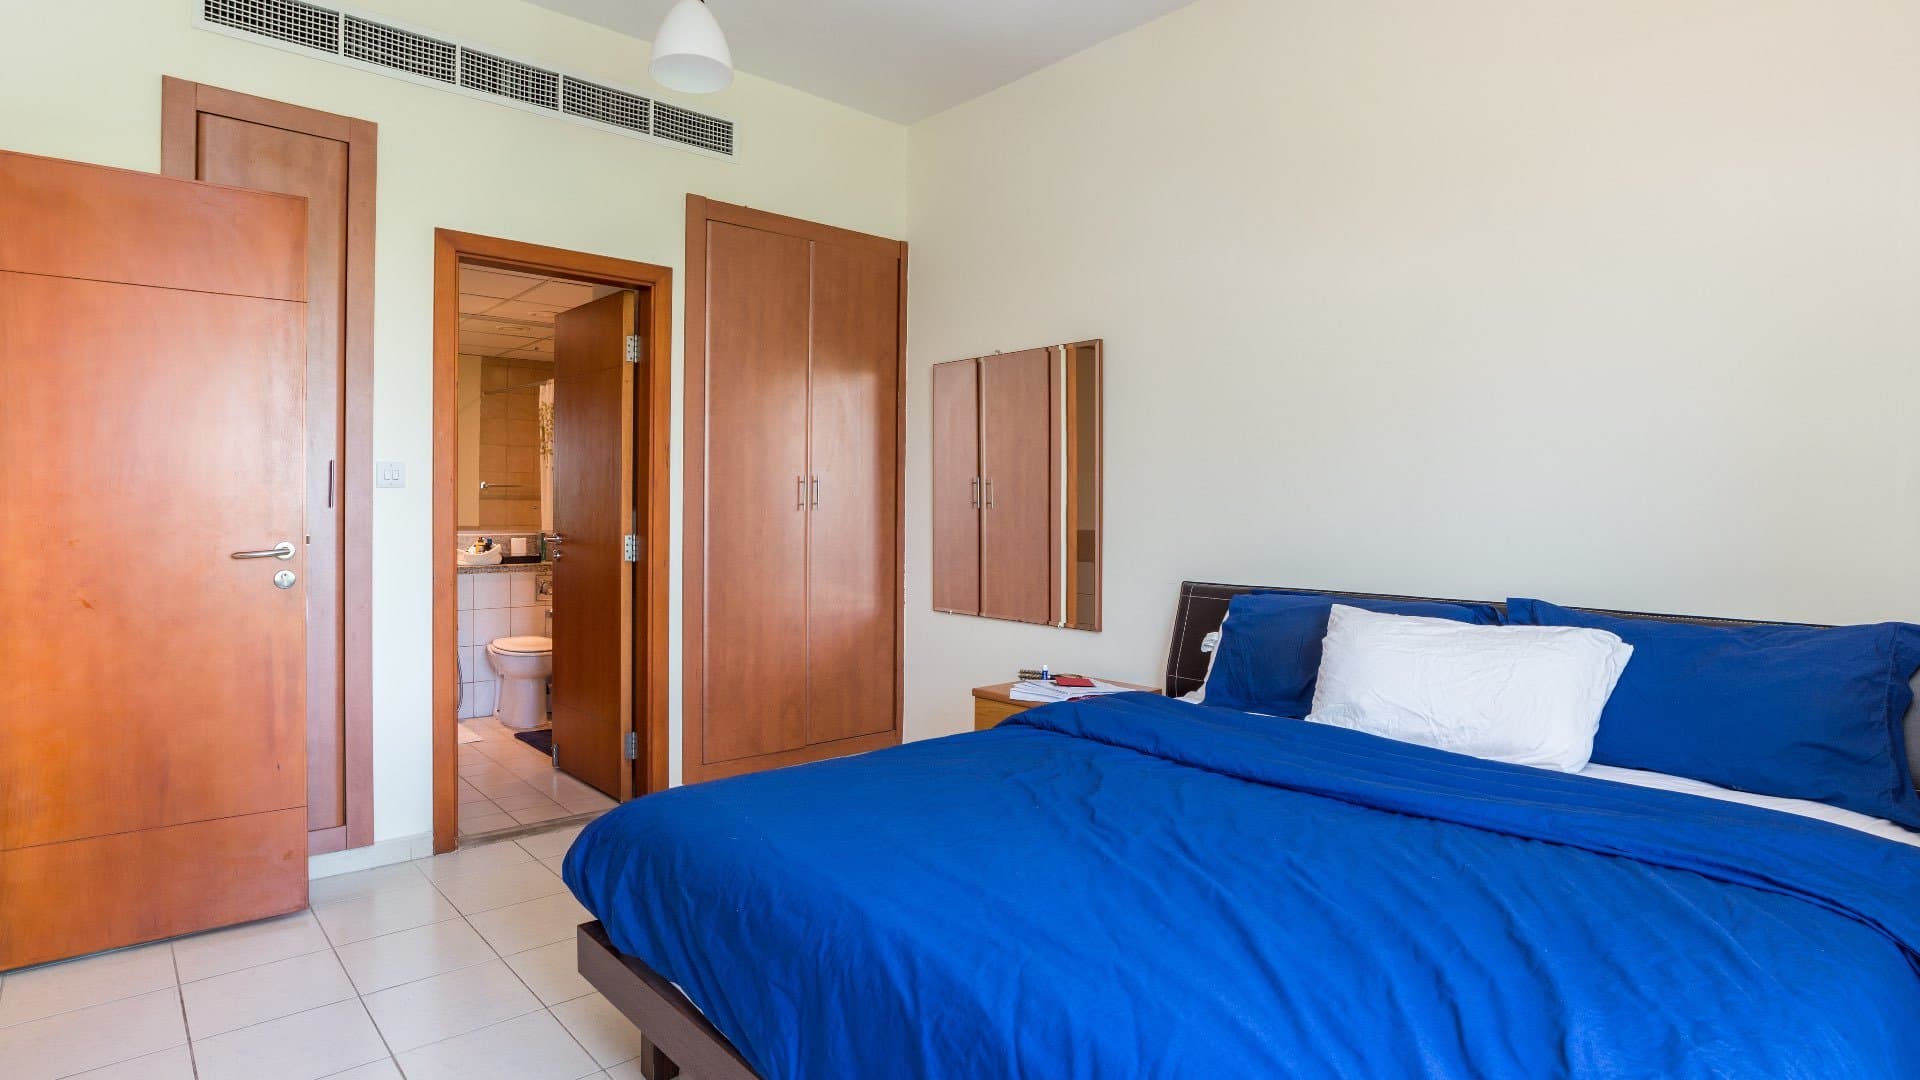 1 Bedroom Apartment For Rent Al Dhafrah Lp07315 1aecf6a7e9d00100.jpg